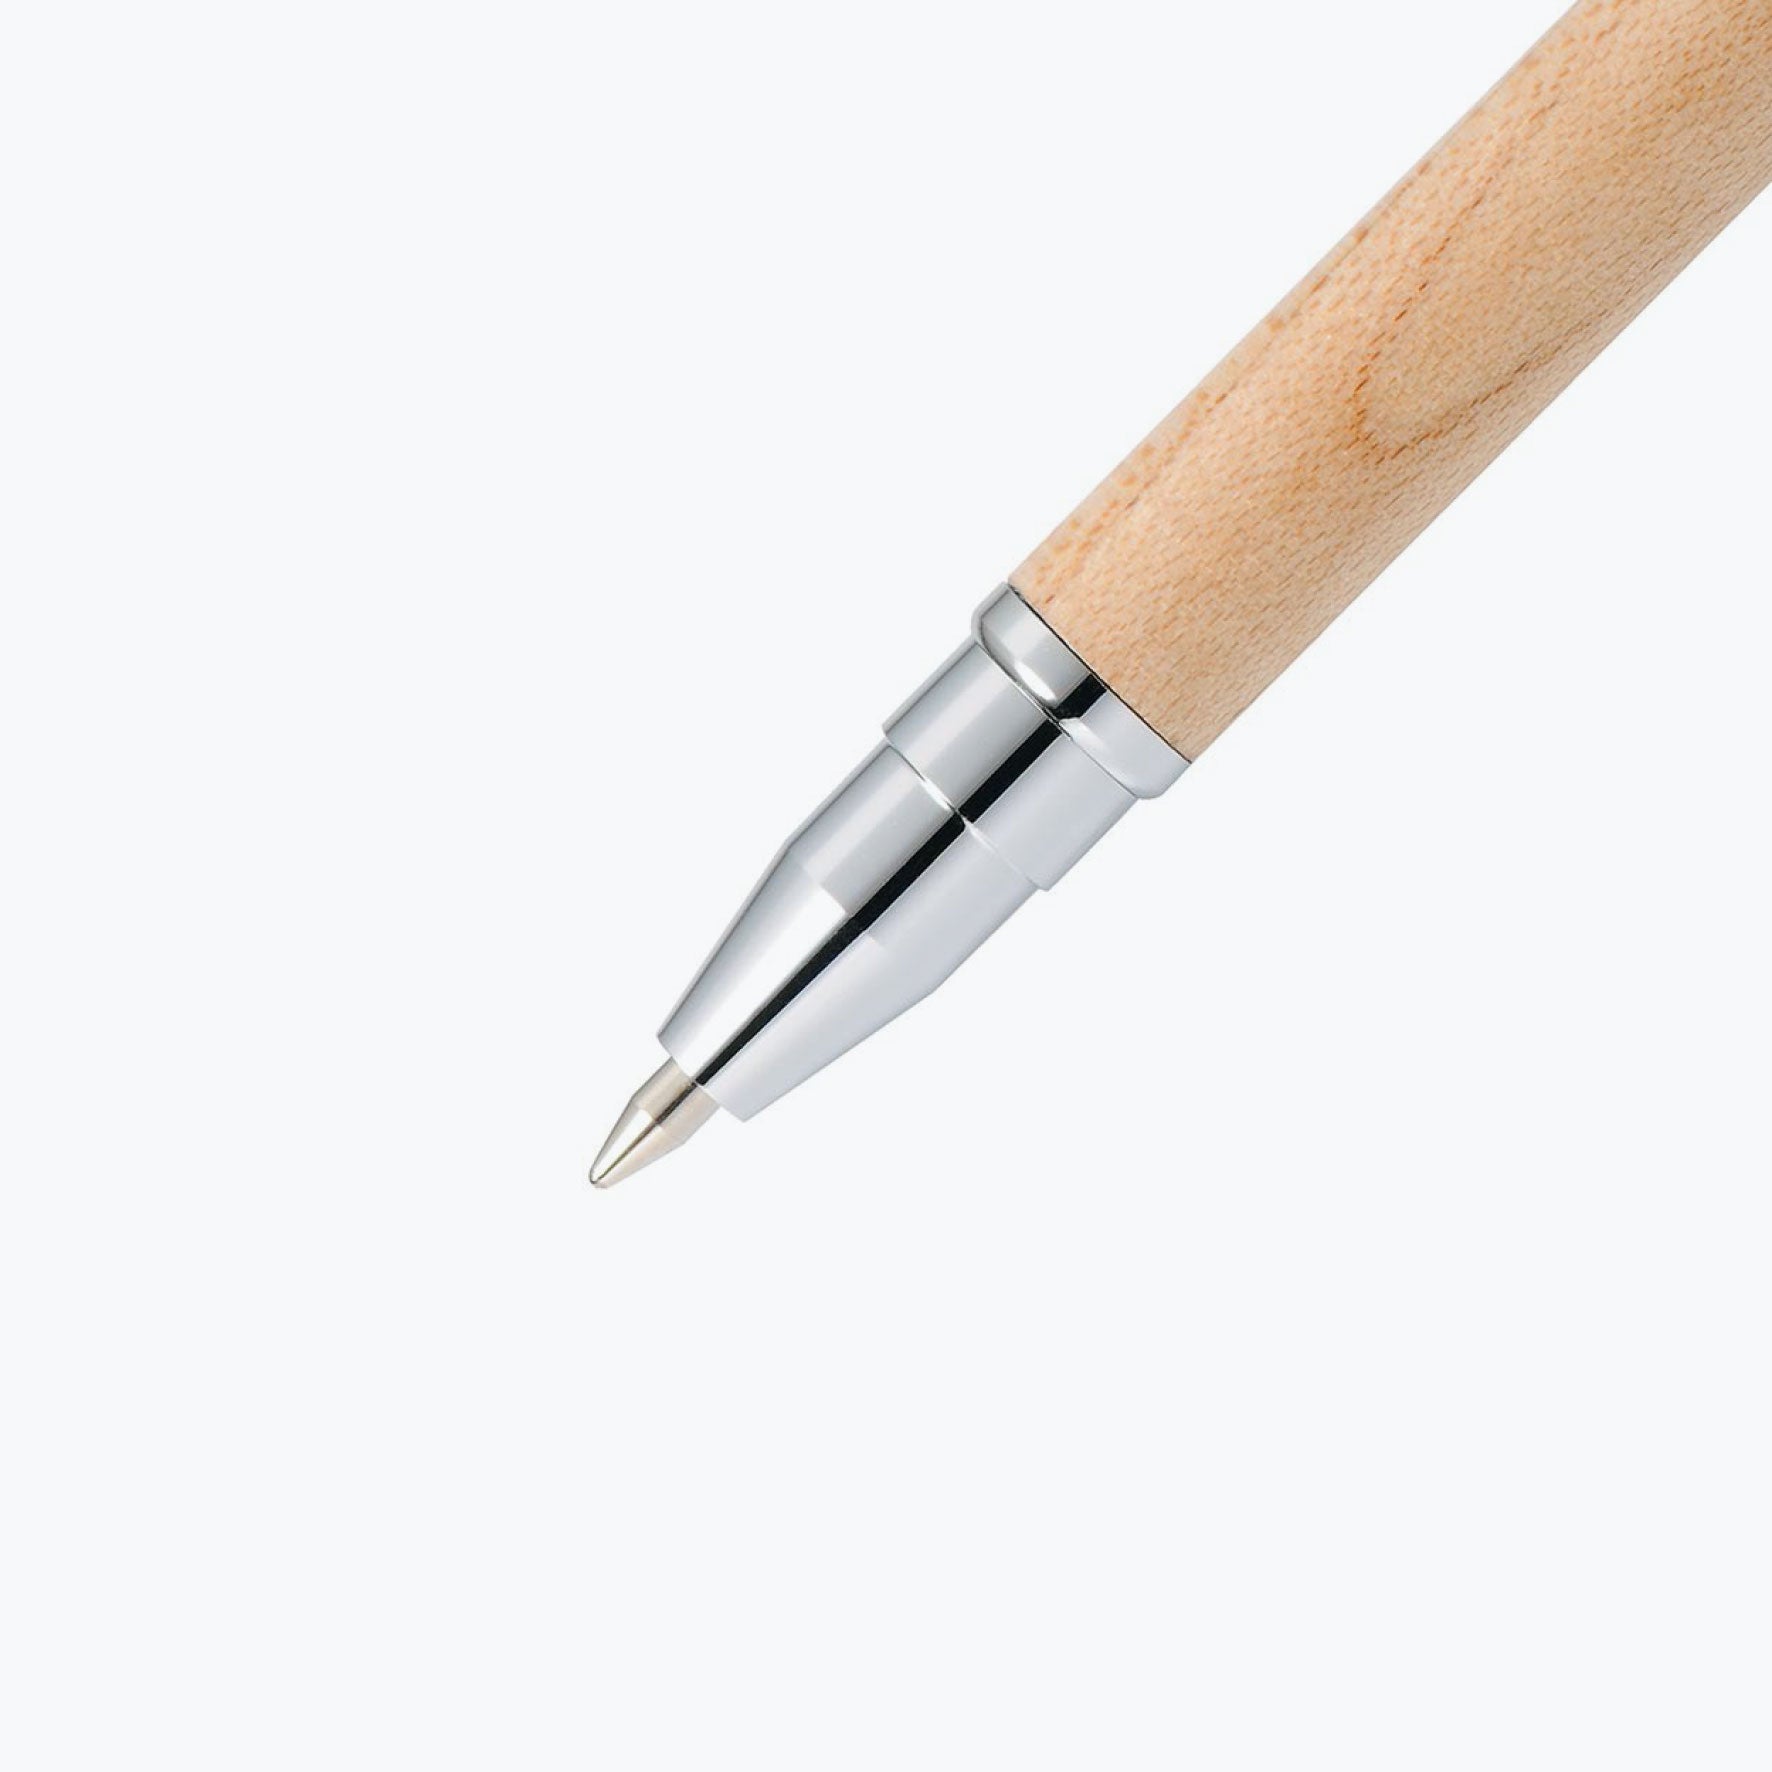 Online Germany - Ballpoint Pen - Mini Wood - Maple